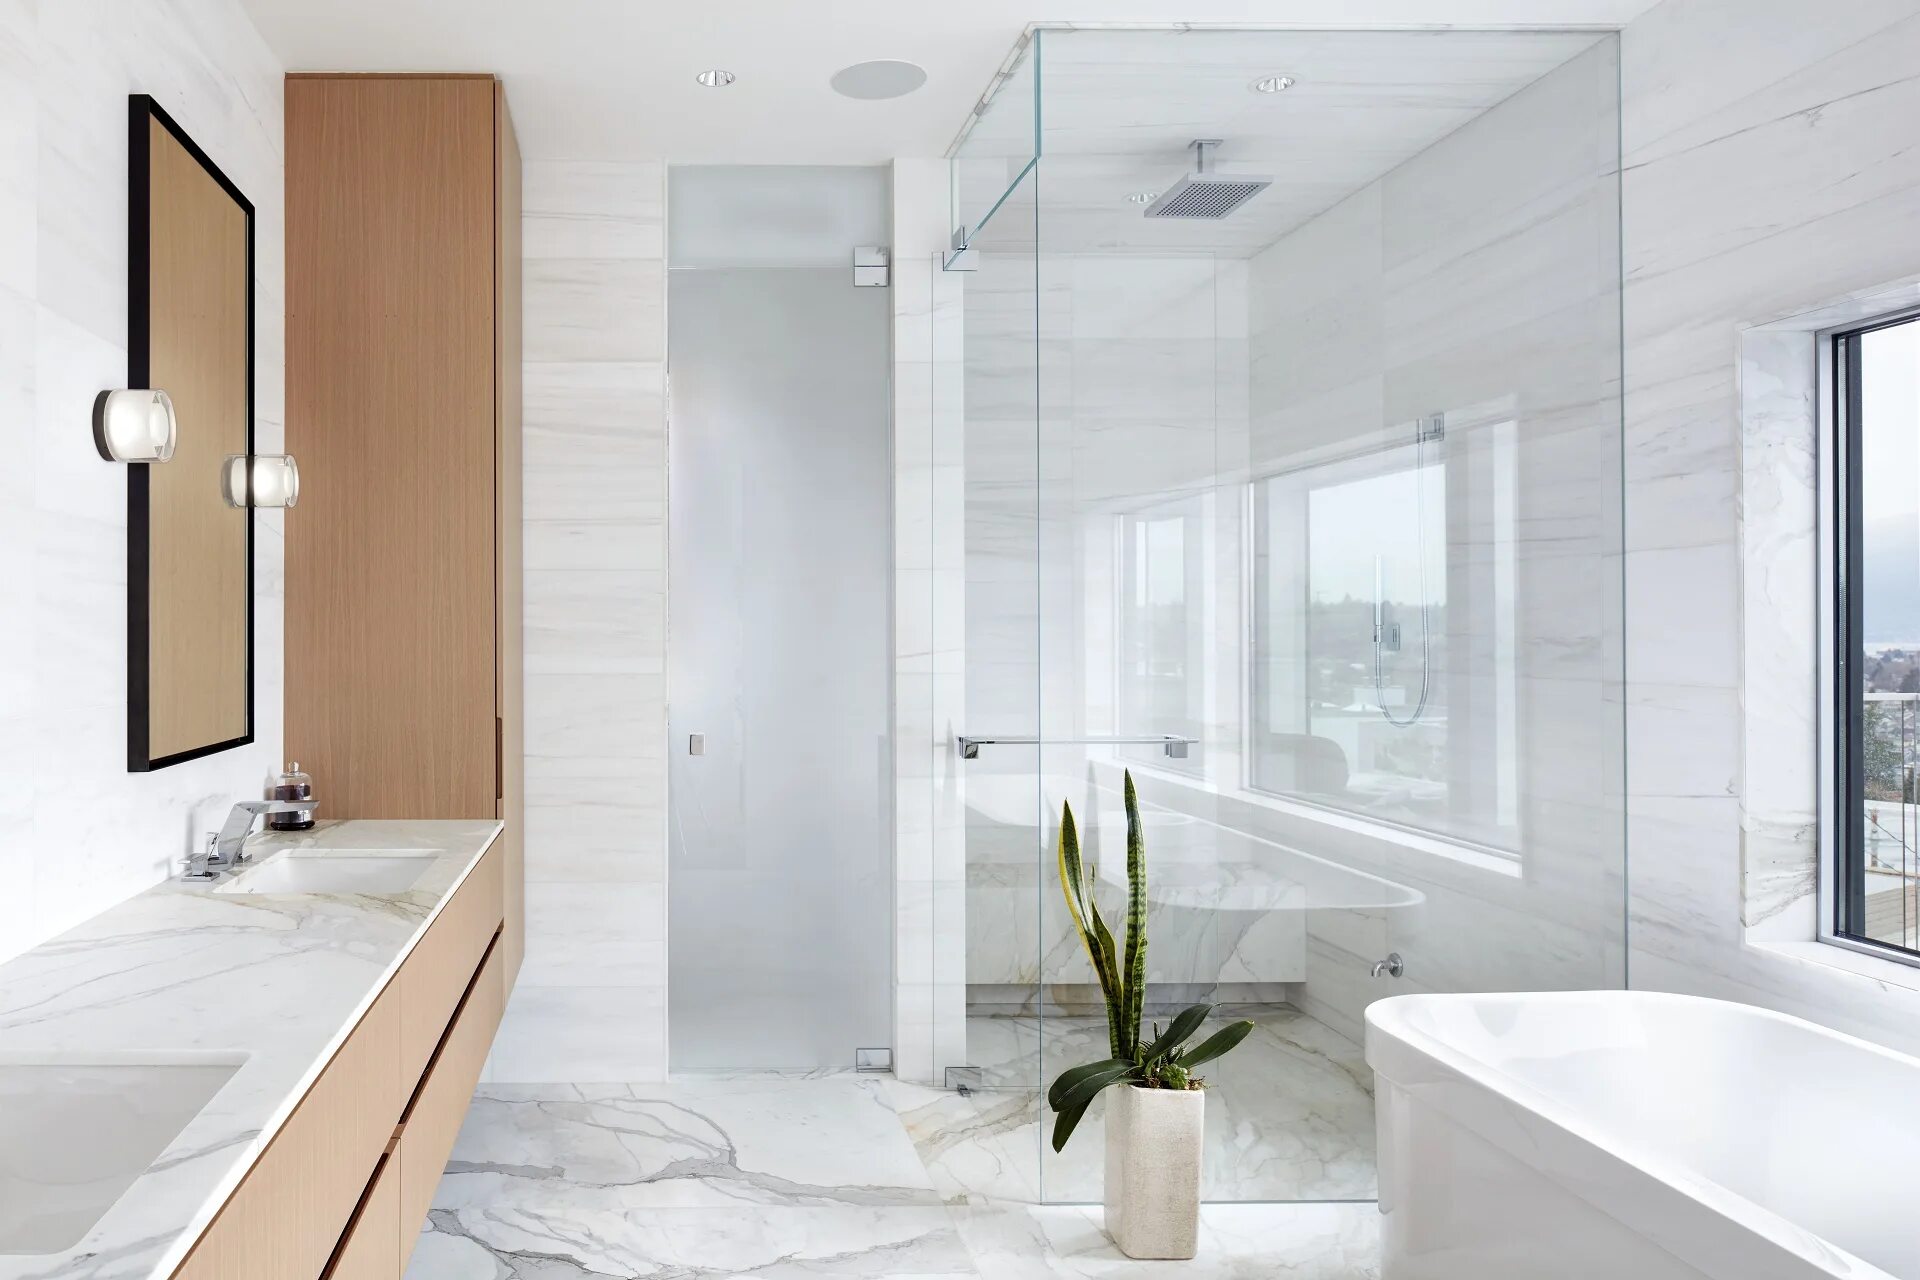 Панельная ванная комната. Стильные панели для ванной. Стильные стеновые панели для ванной. Интерьер ванной комнаты панелями. Современные панели для ванной комнаты.